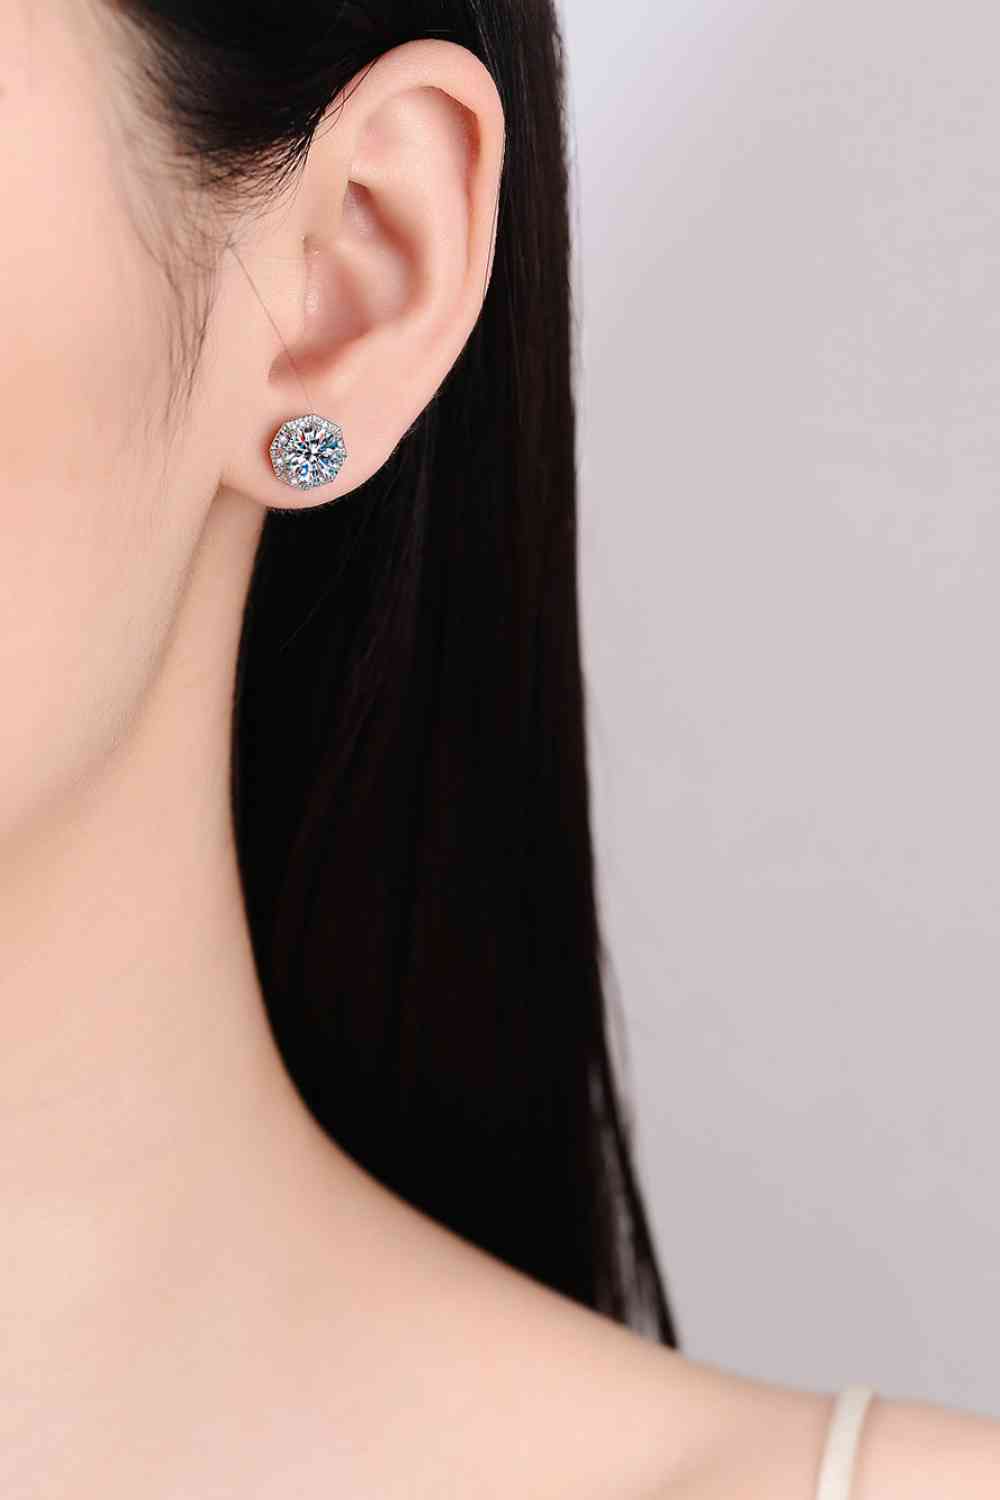 2 Carat Moissanite 925 Sterling Silver Stud Earrings - Pahabu